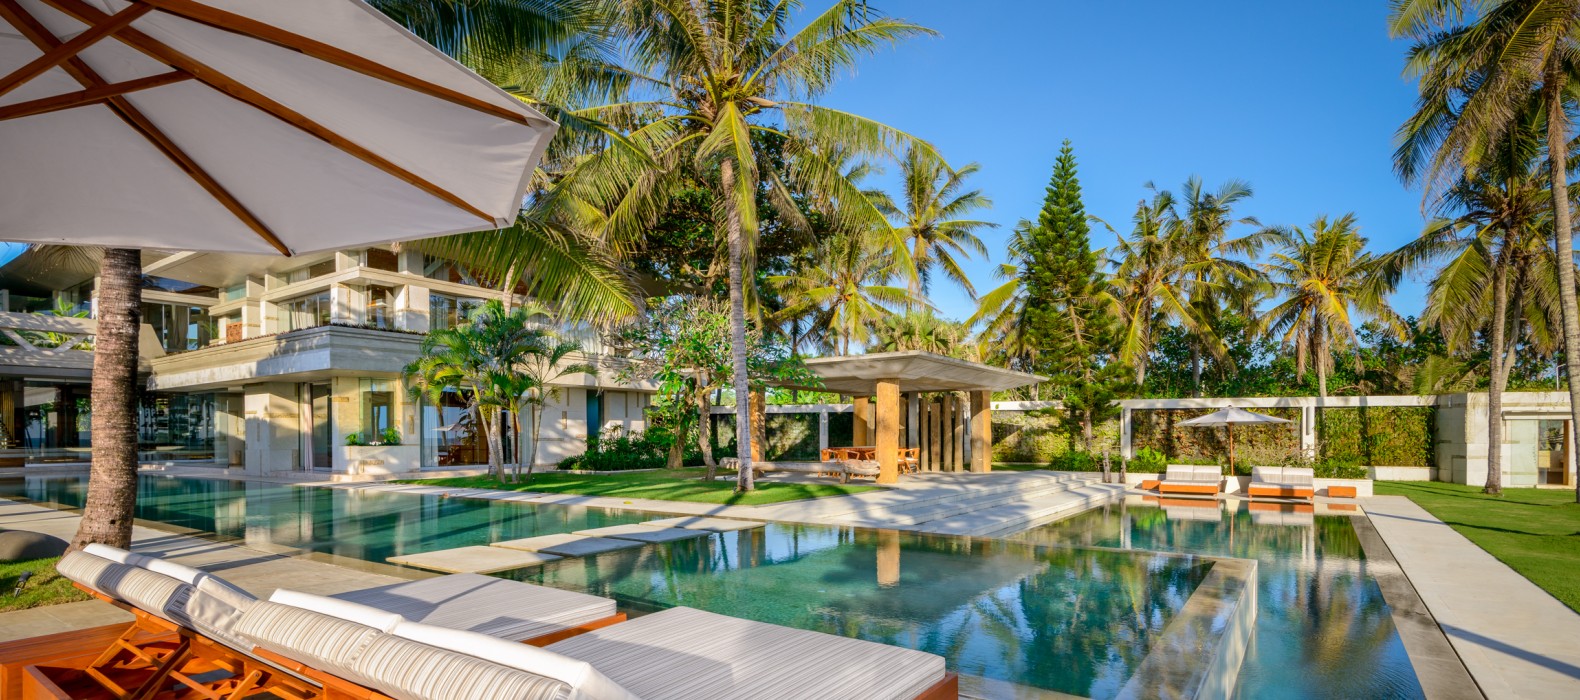 Exterior pool area view of Villa La Vela in Bali